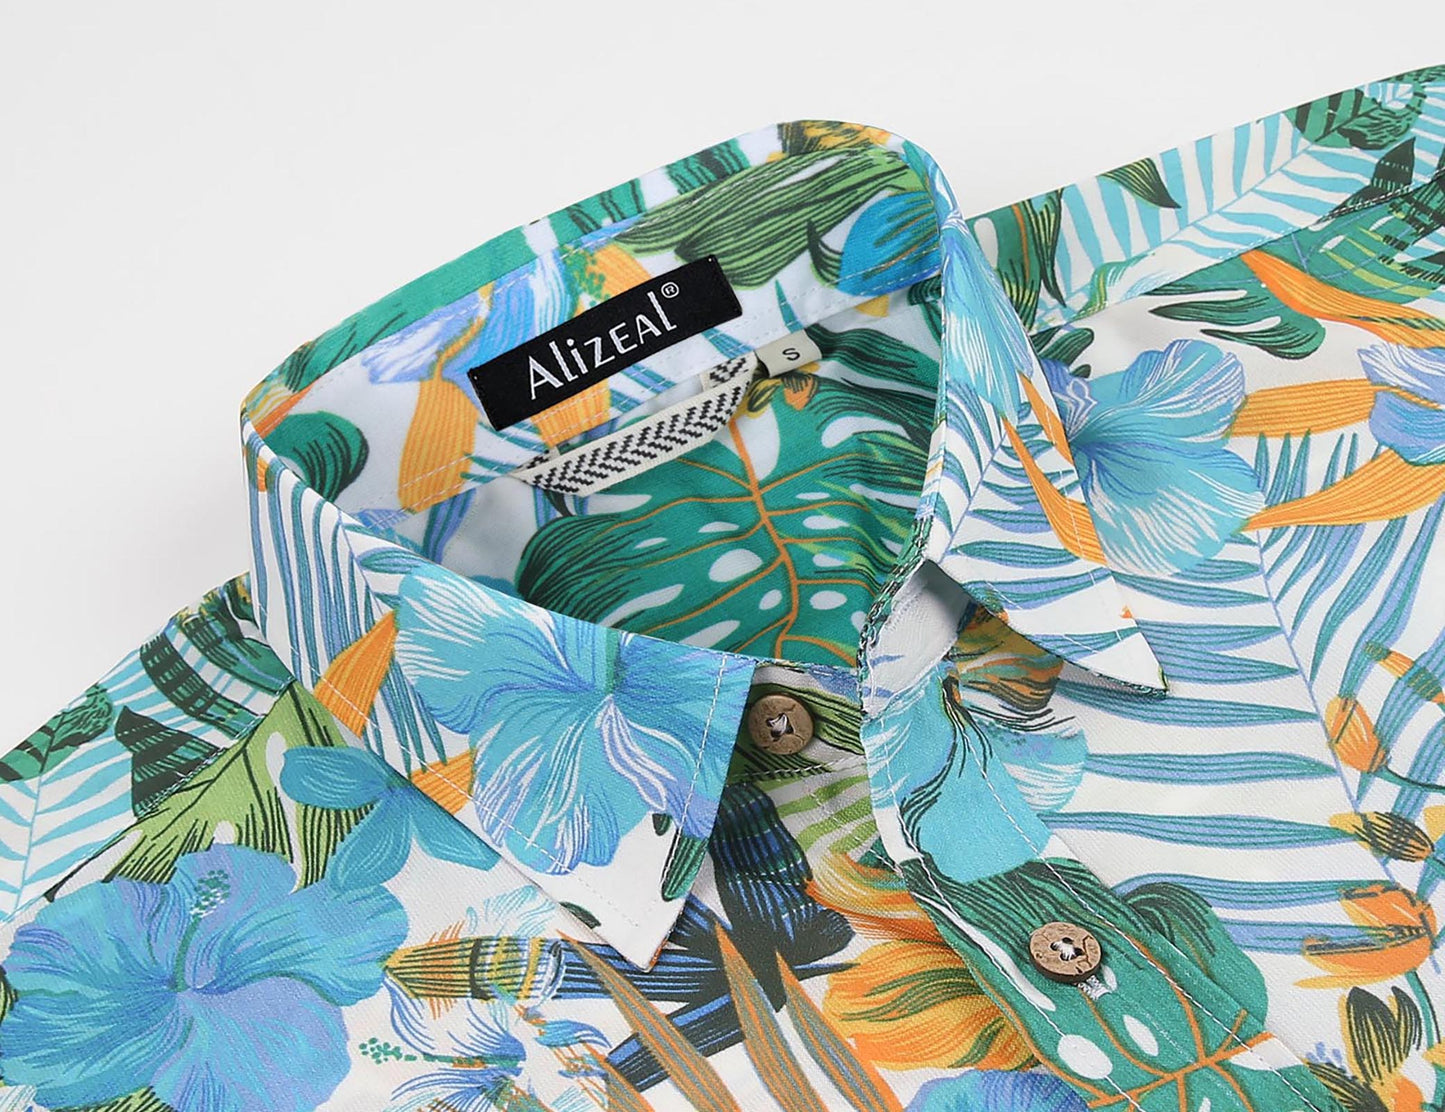 Alizeal Mens Hawaiian Short Sleeve Shirts Floral Casual Button Down Summer Aloha Beach Shirts, Green (Leaf)